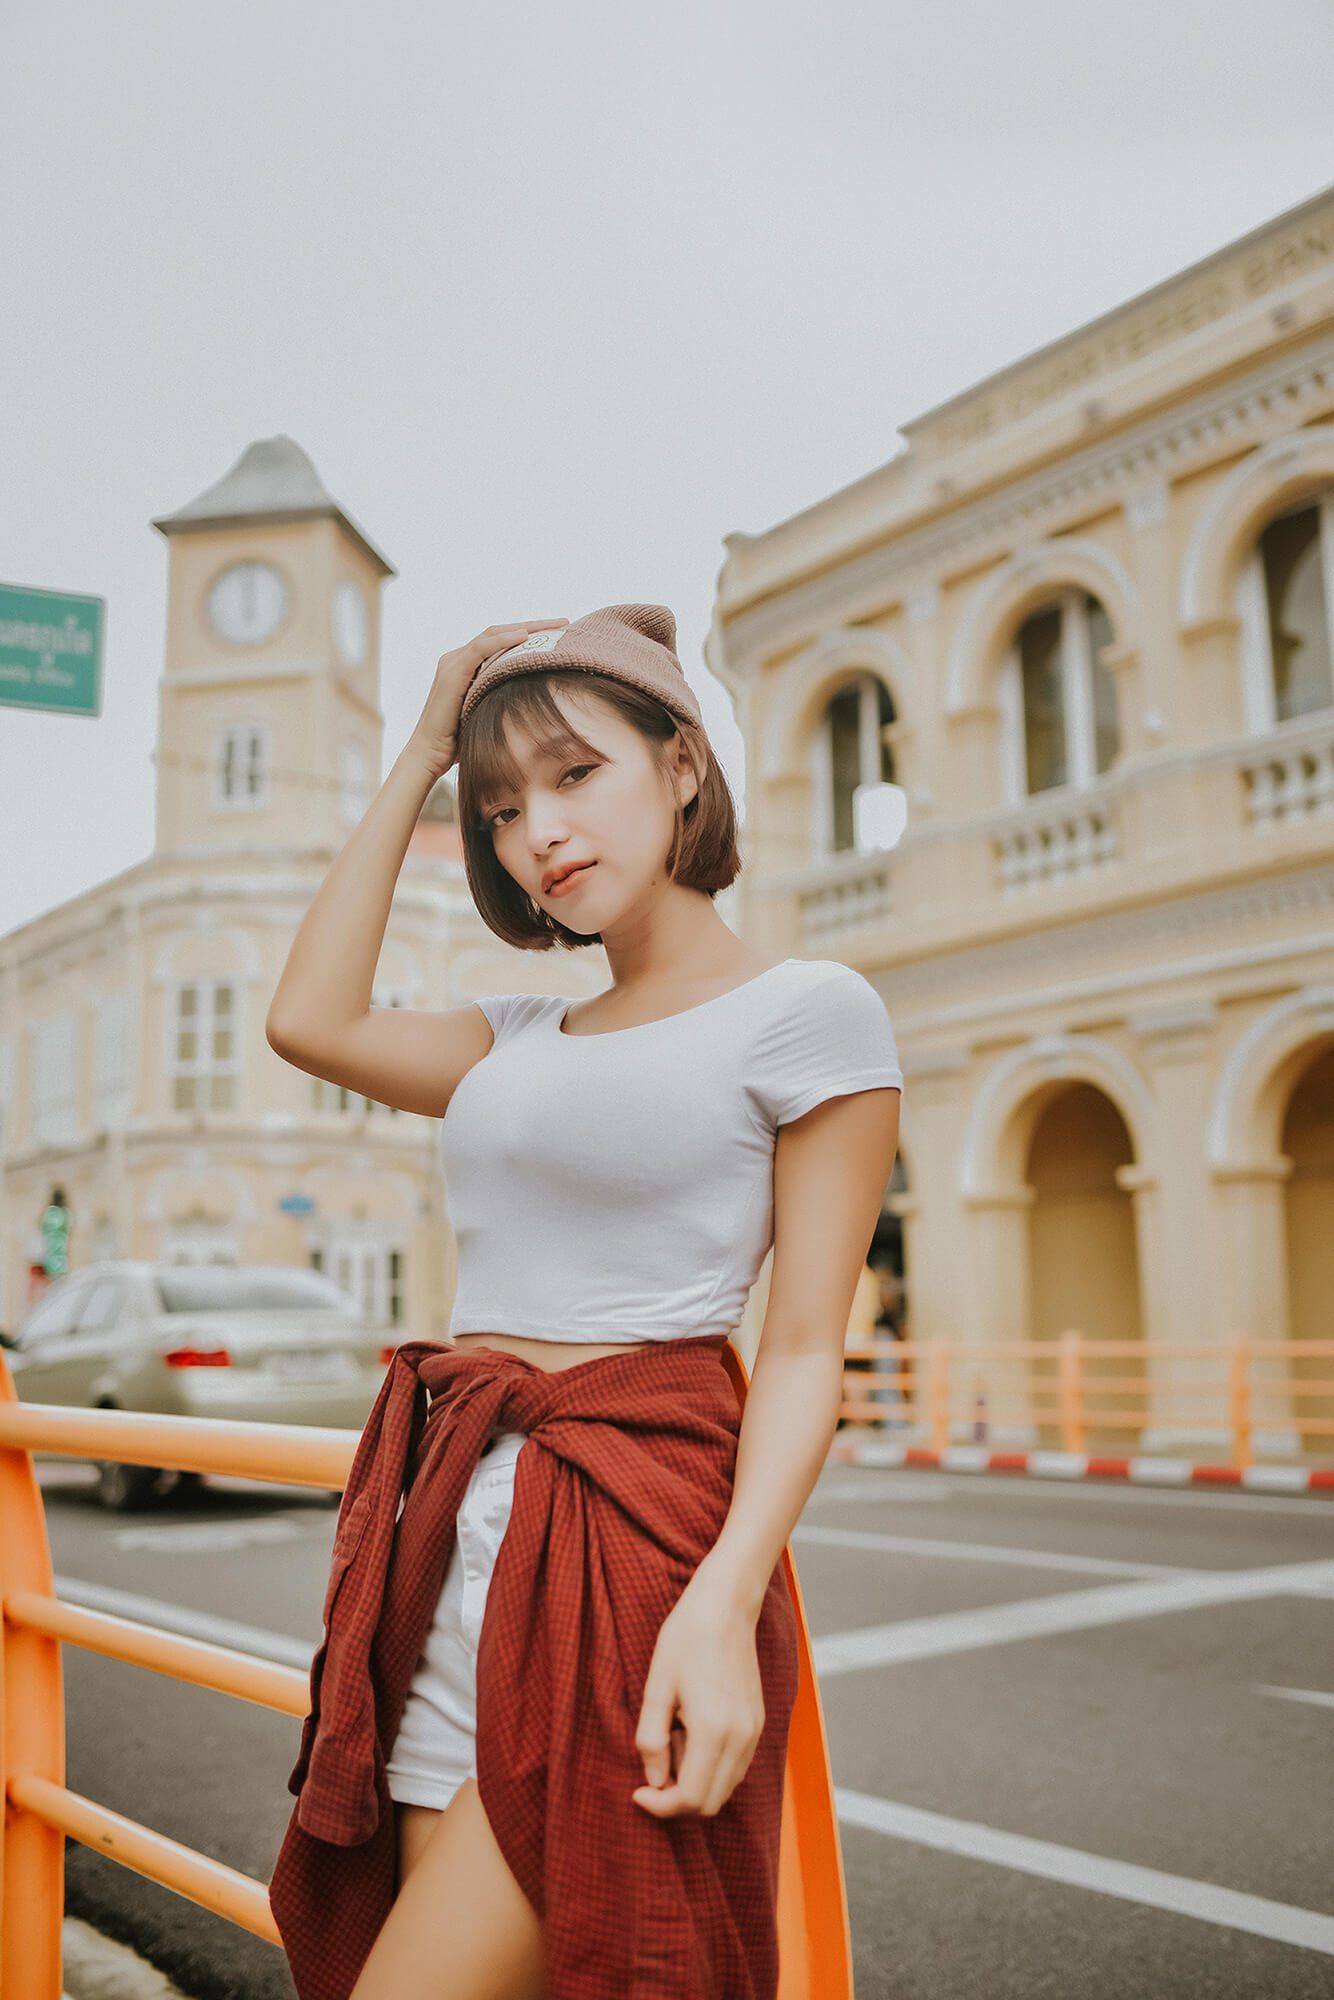 Photoshoot in Phuket Old Town